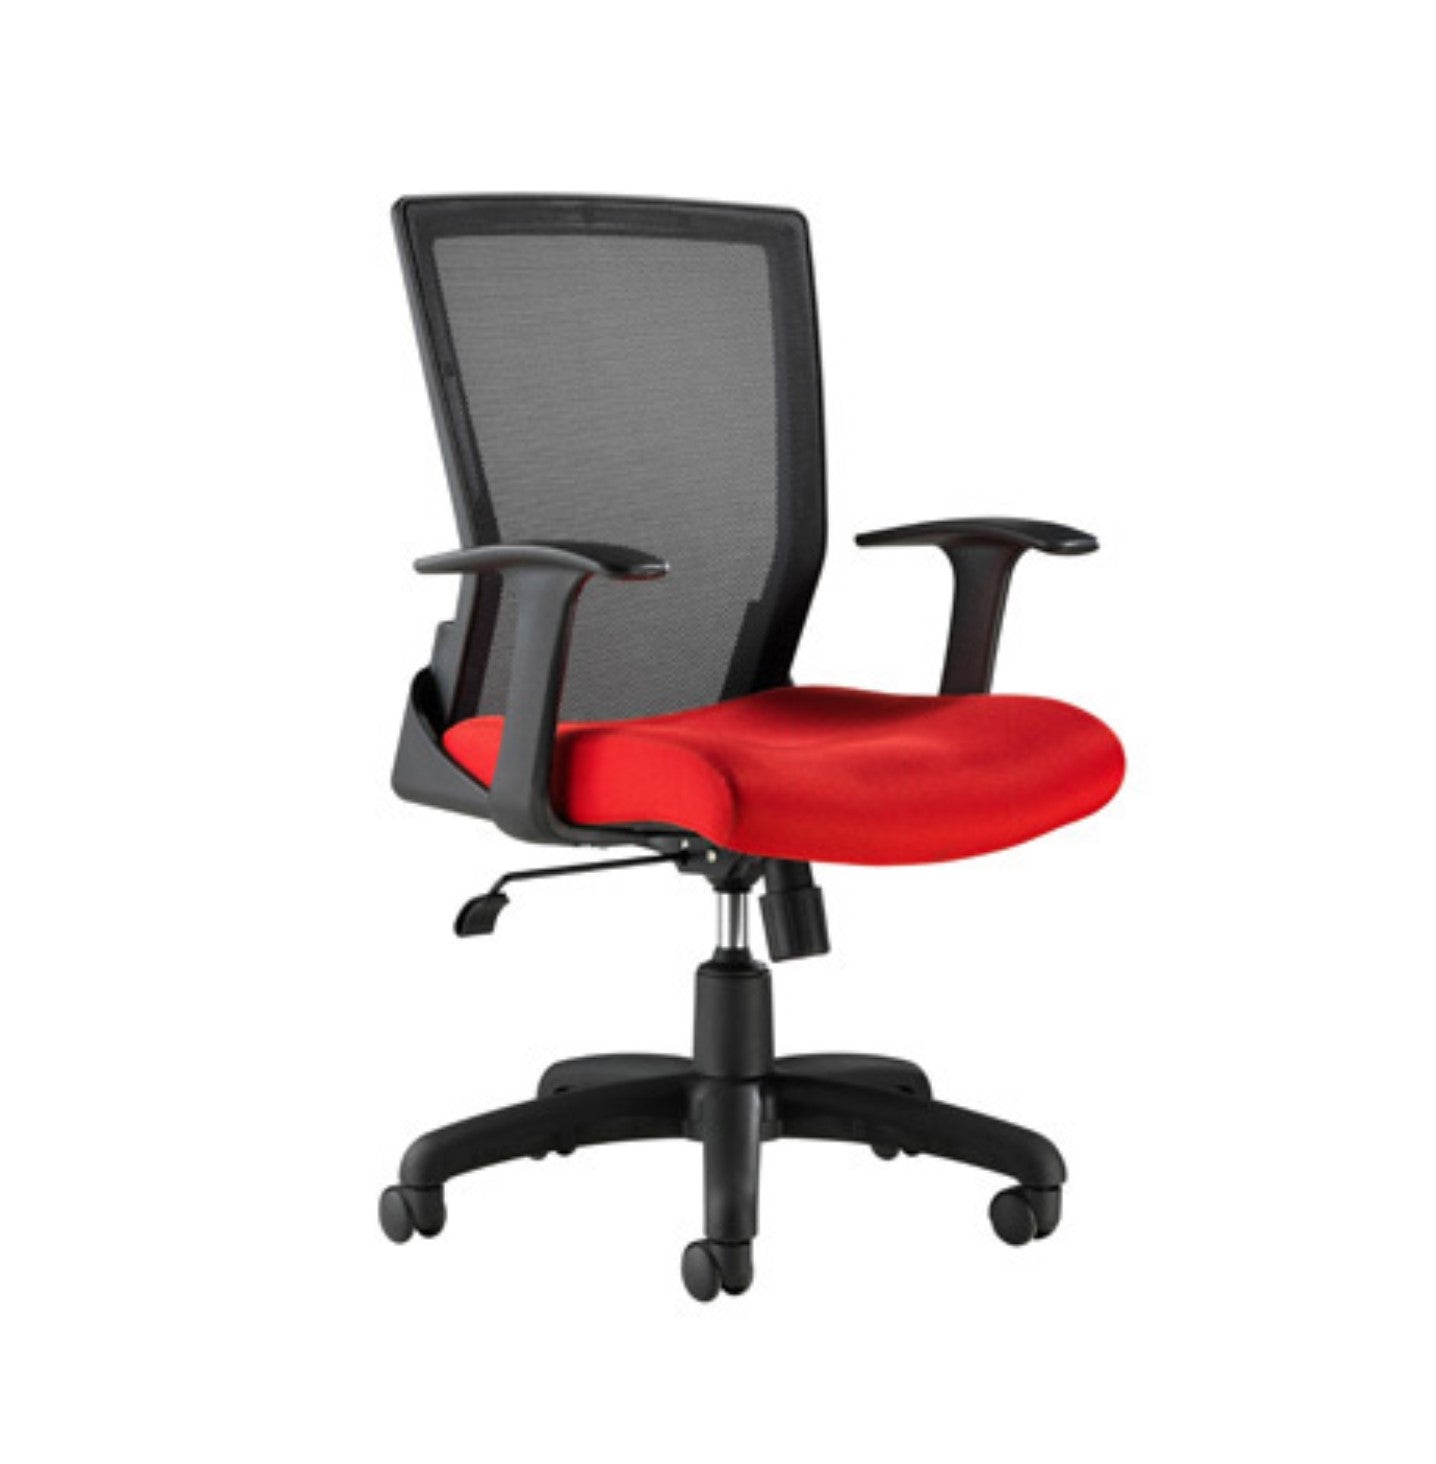 Medium Back Mesh Office Chair US1132M